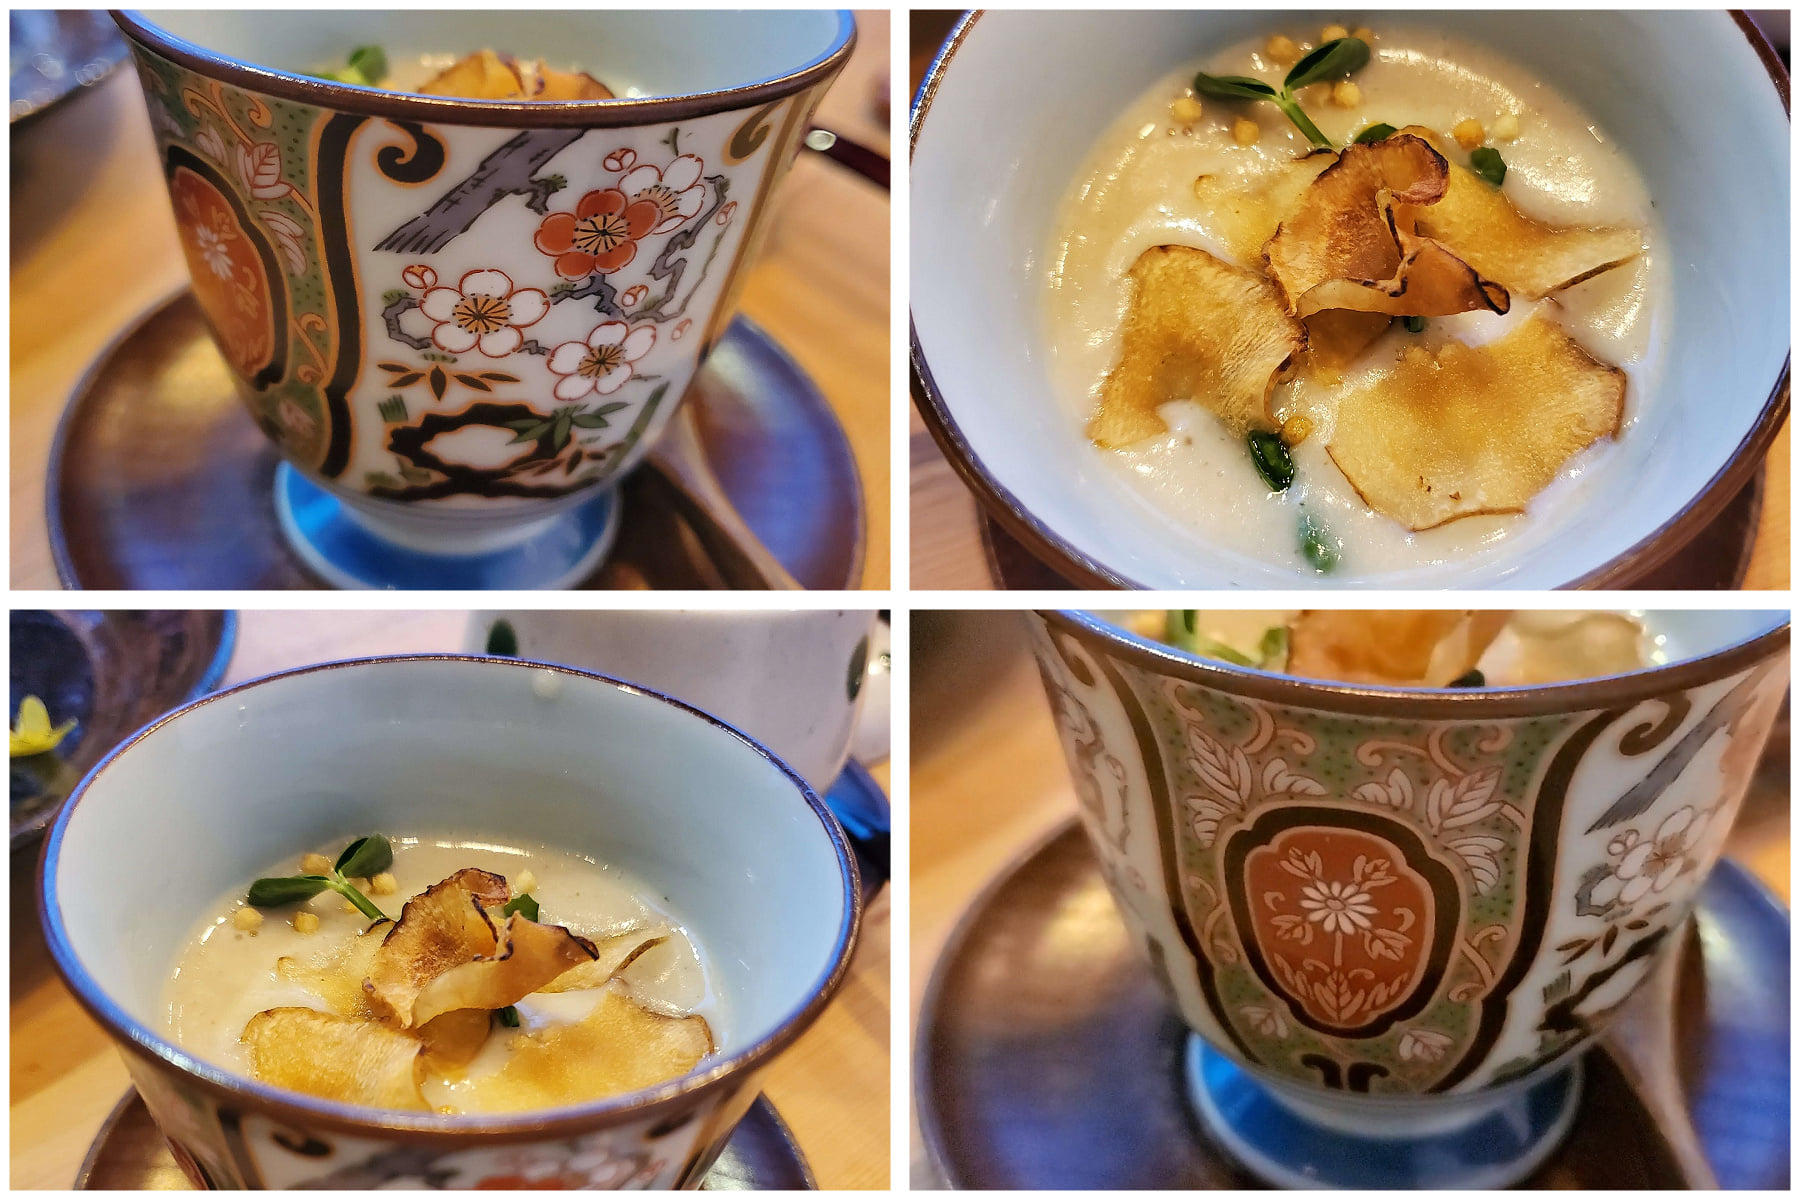  日式料理Sunchoke Potage Soup@Stem Japanese Eatery@Burnaby本拿比